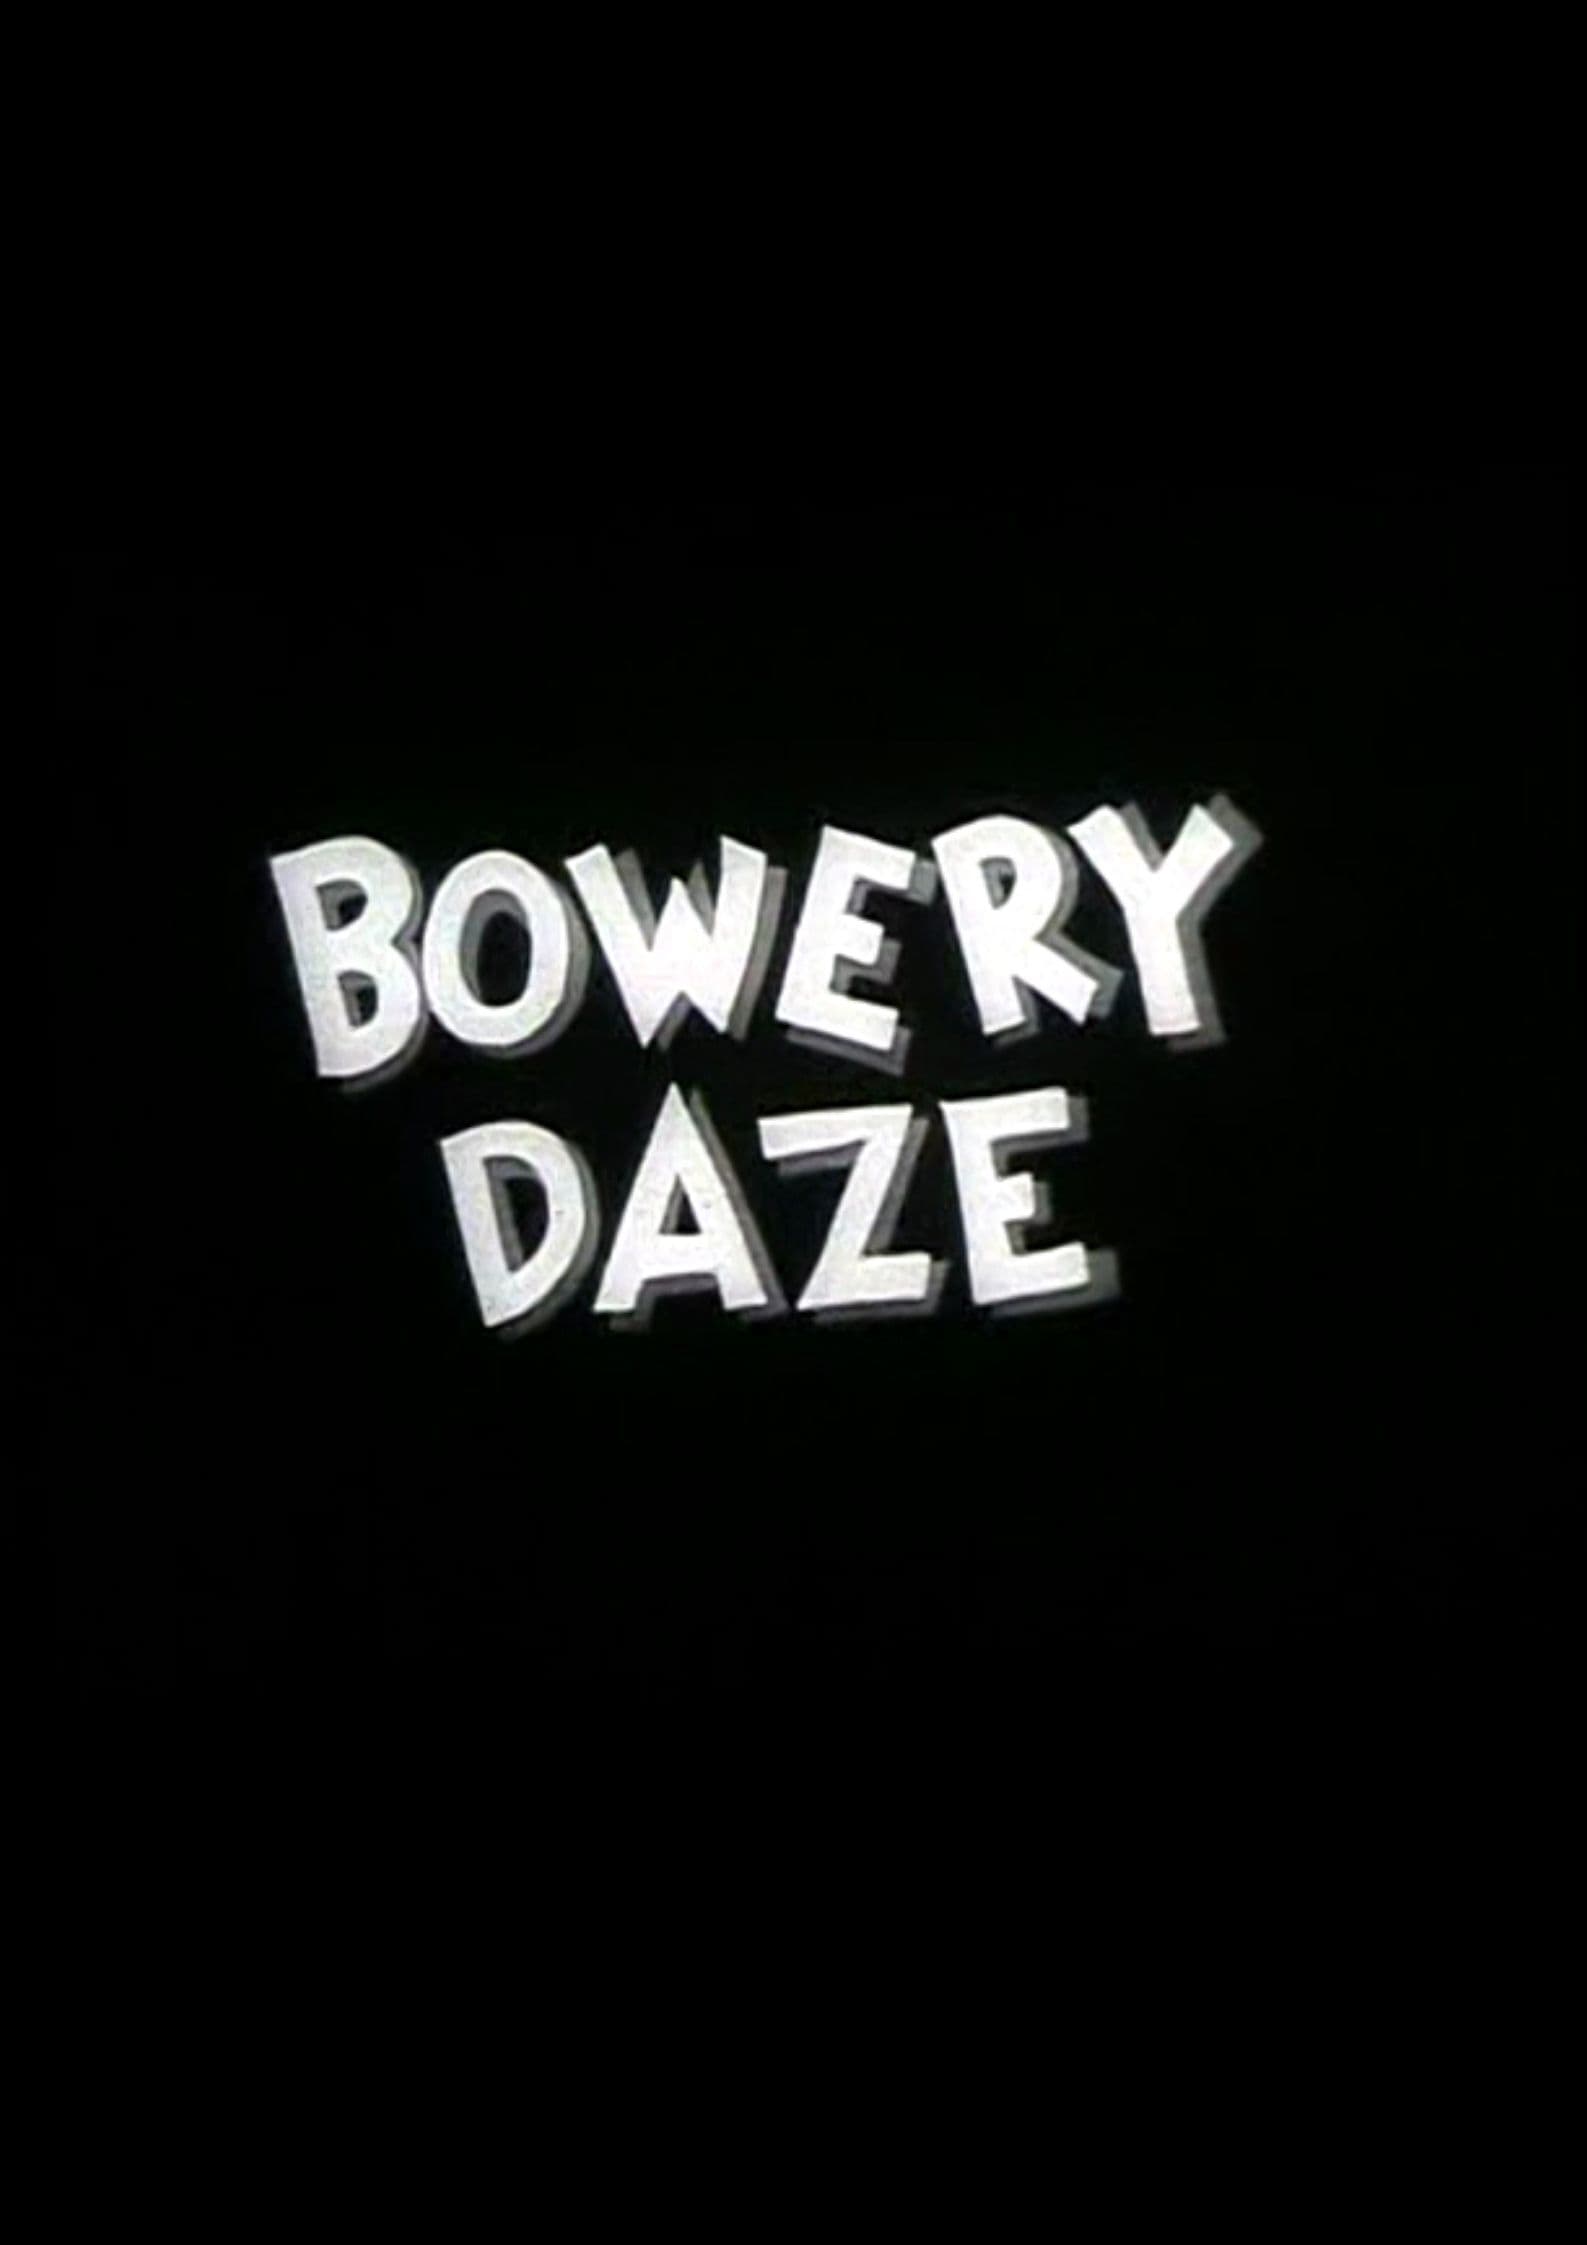 Bowery Daze